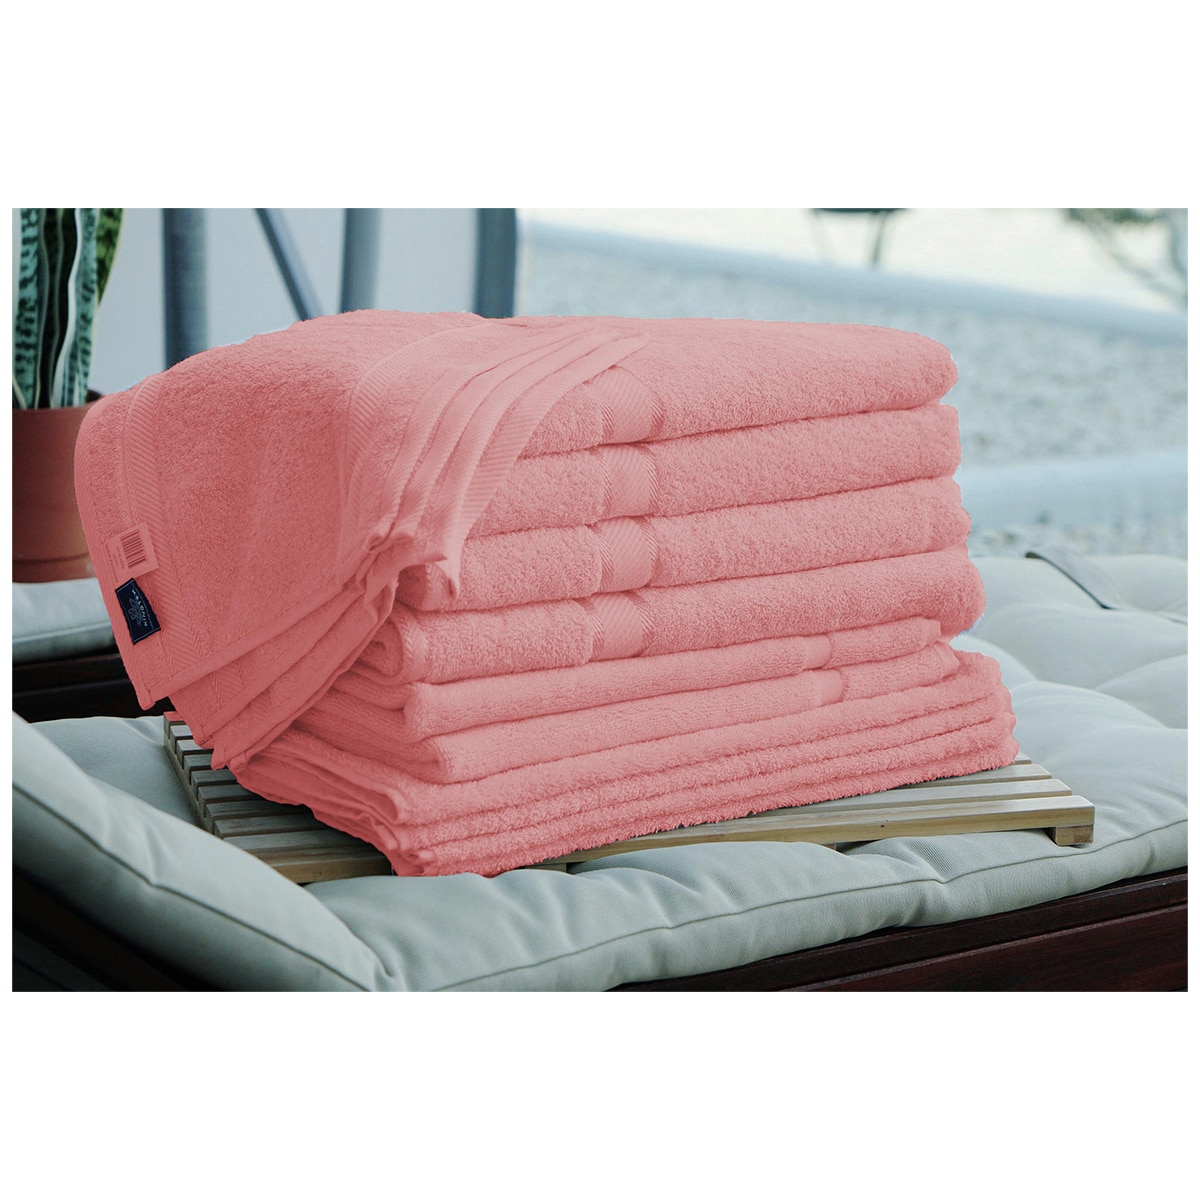 Kingtex Plain dyed 100% Combed Cotton towel range 550gsm Bath Sheet set 14 piece - Rust